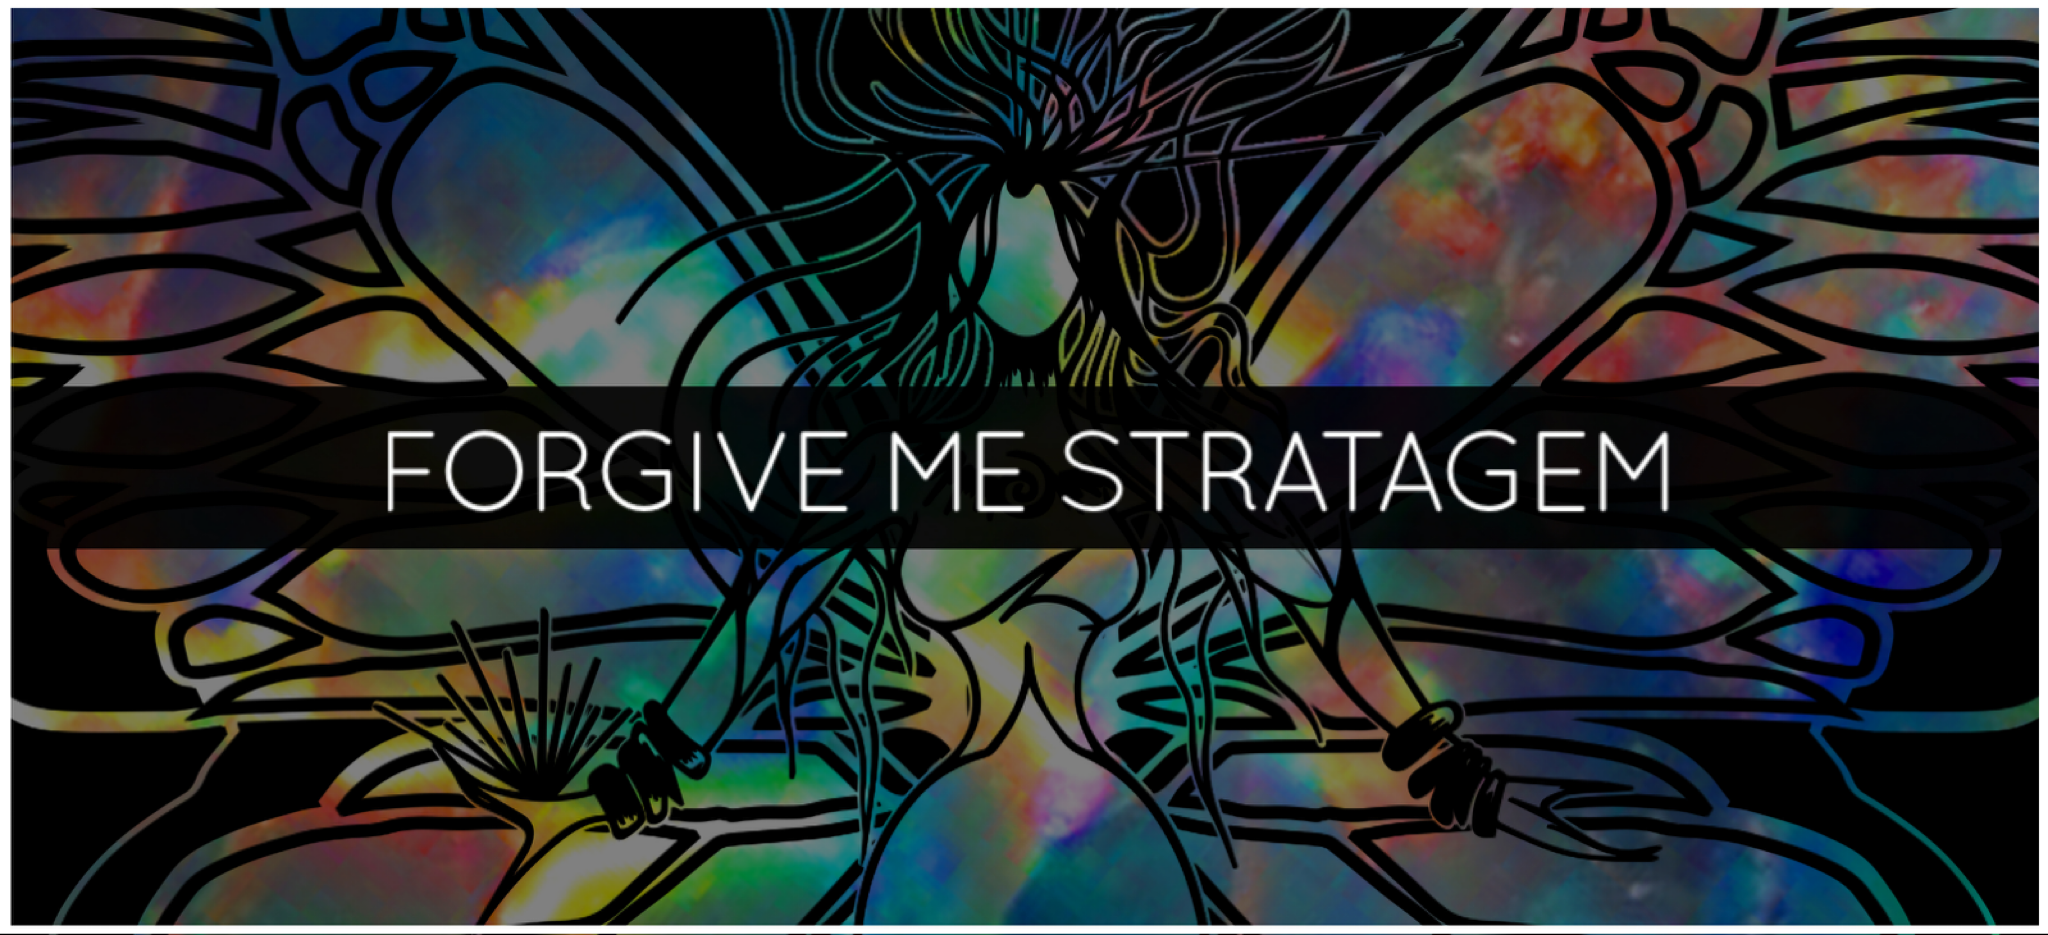 FORGIVE ME STRATAGEM